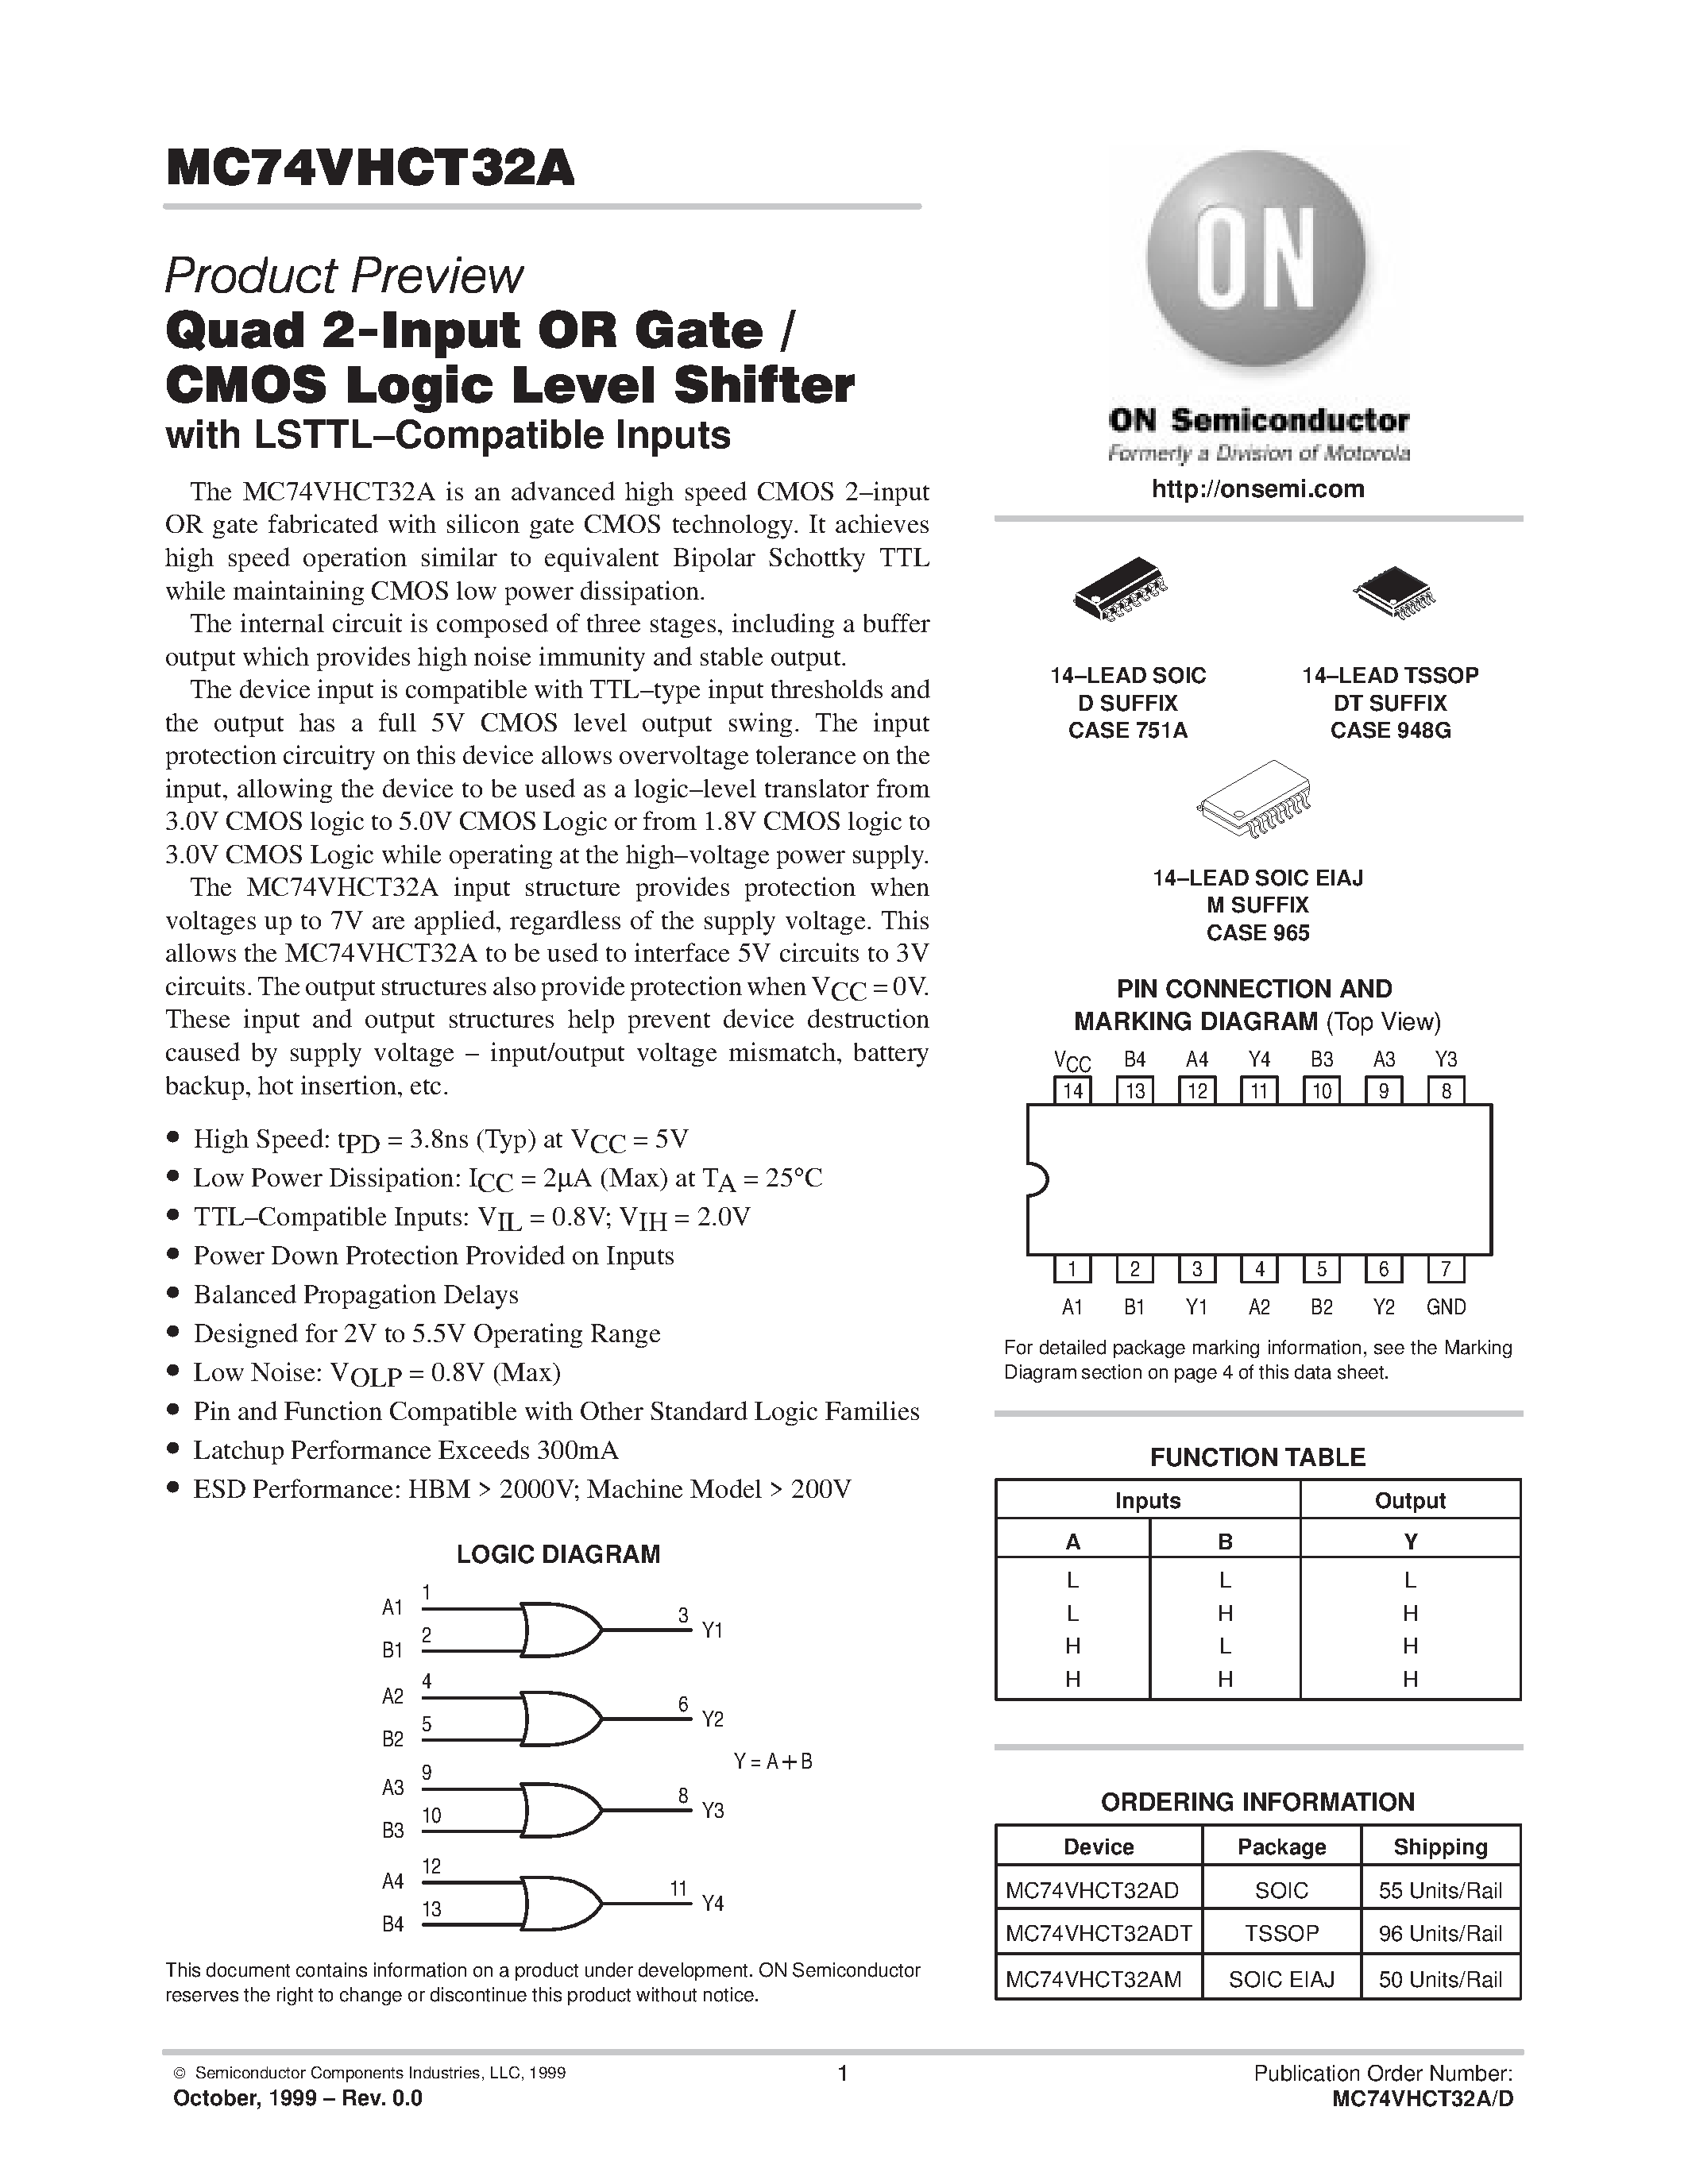 Datasheet MC74VHCT32A - QUAD 2 INPUT OR GATE CMOS LOGIC LEVEL SHIFTER page 1